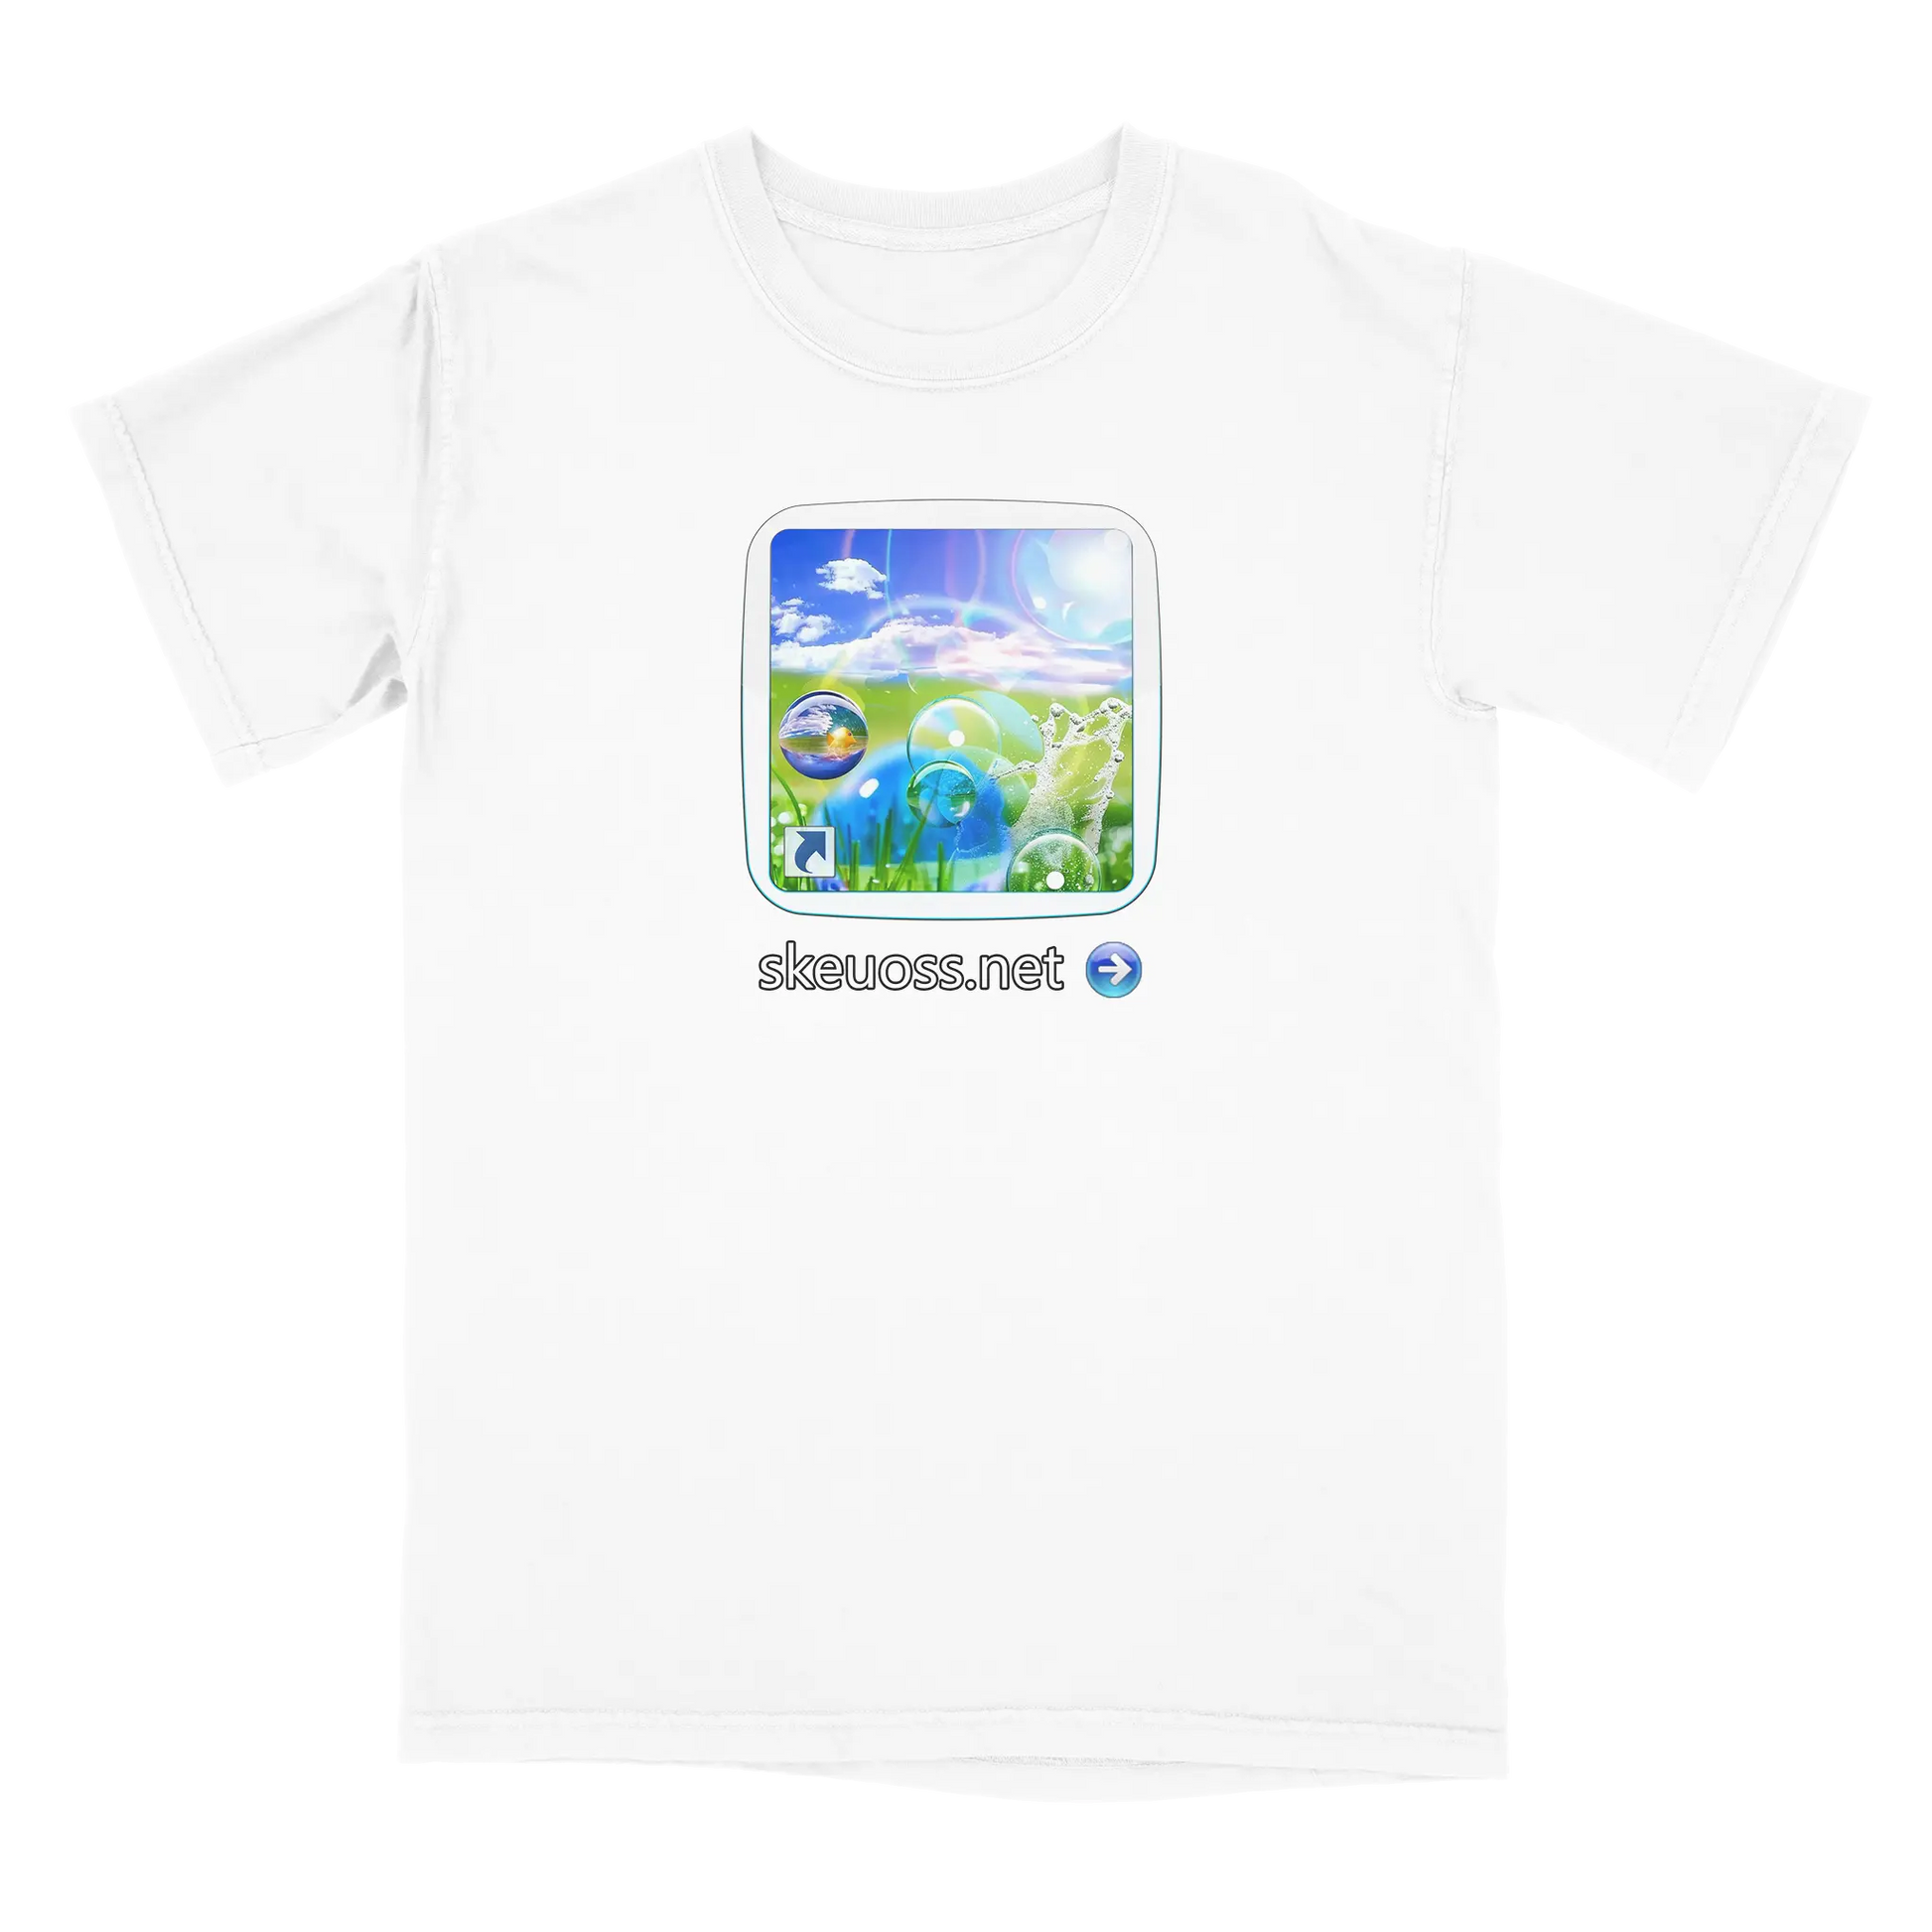 Frutiger Aero T-shirt - User Login Collection - User 250